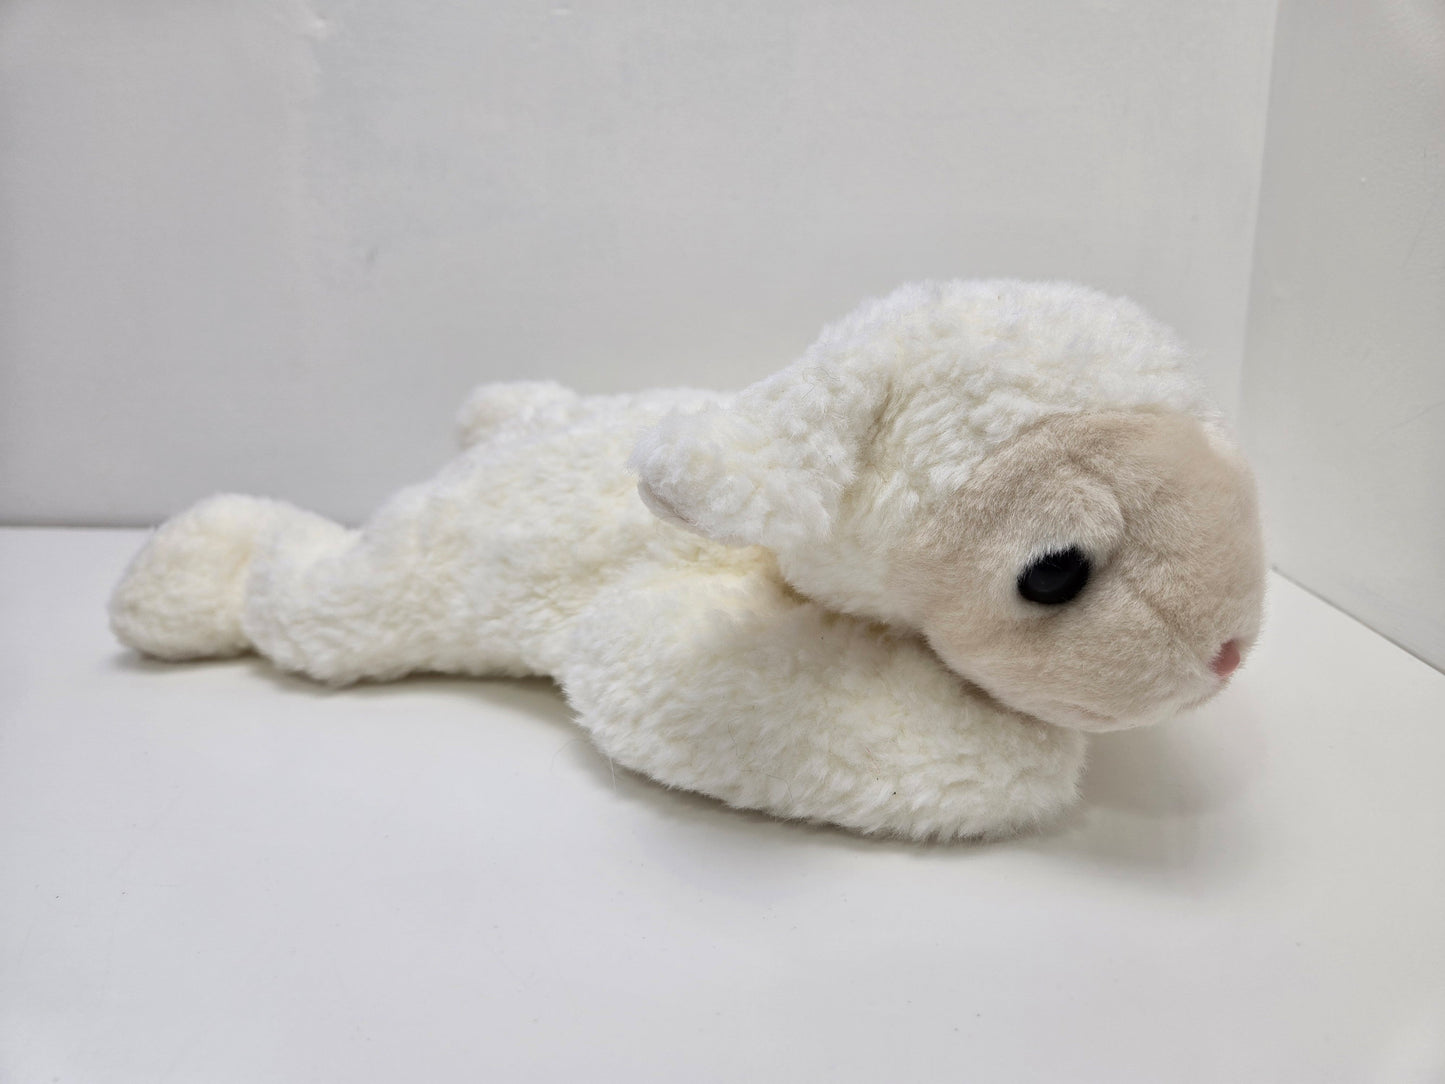 Ty Beanie Buddy “Fleece” the Lamb (13.5 inch)